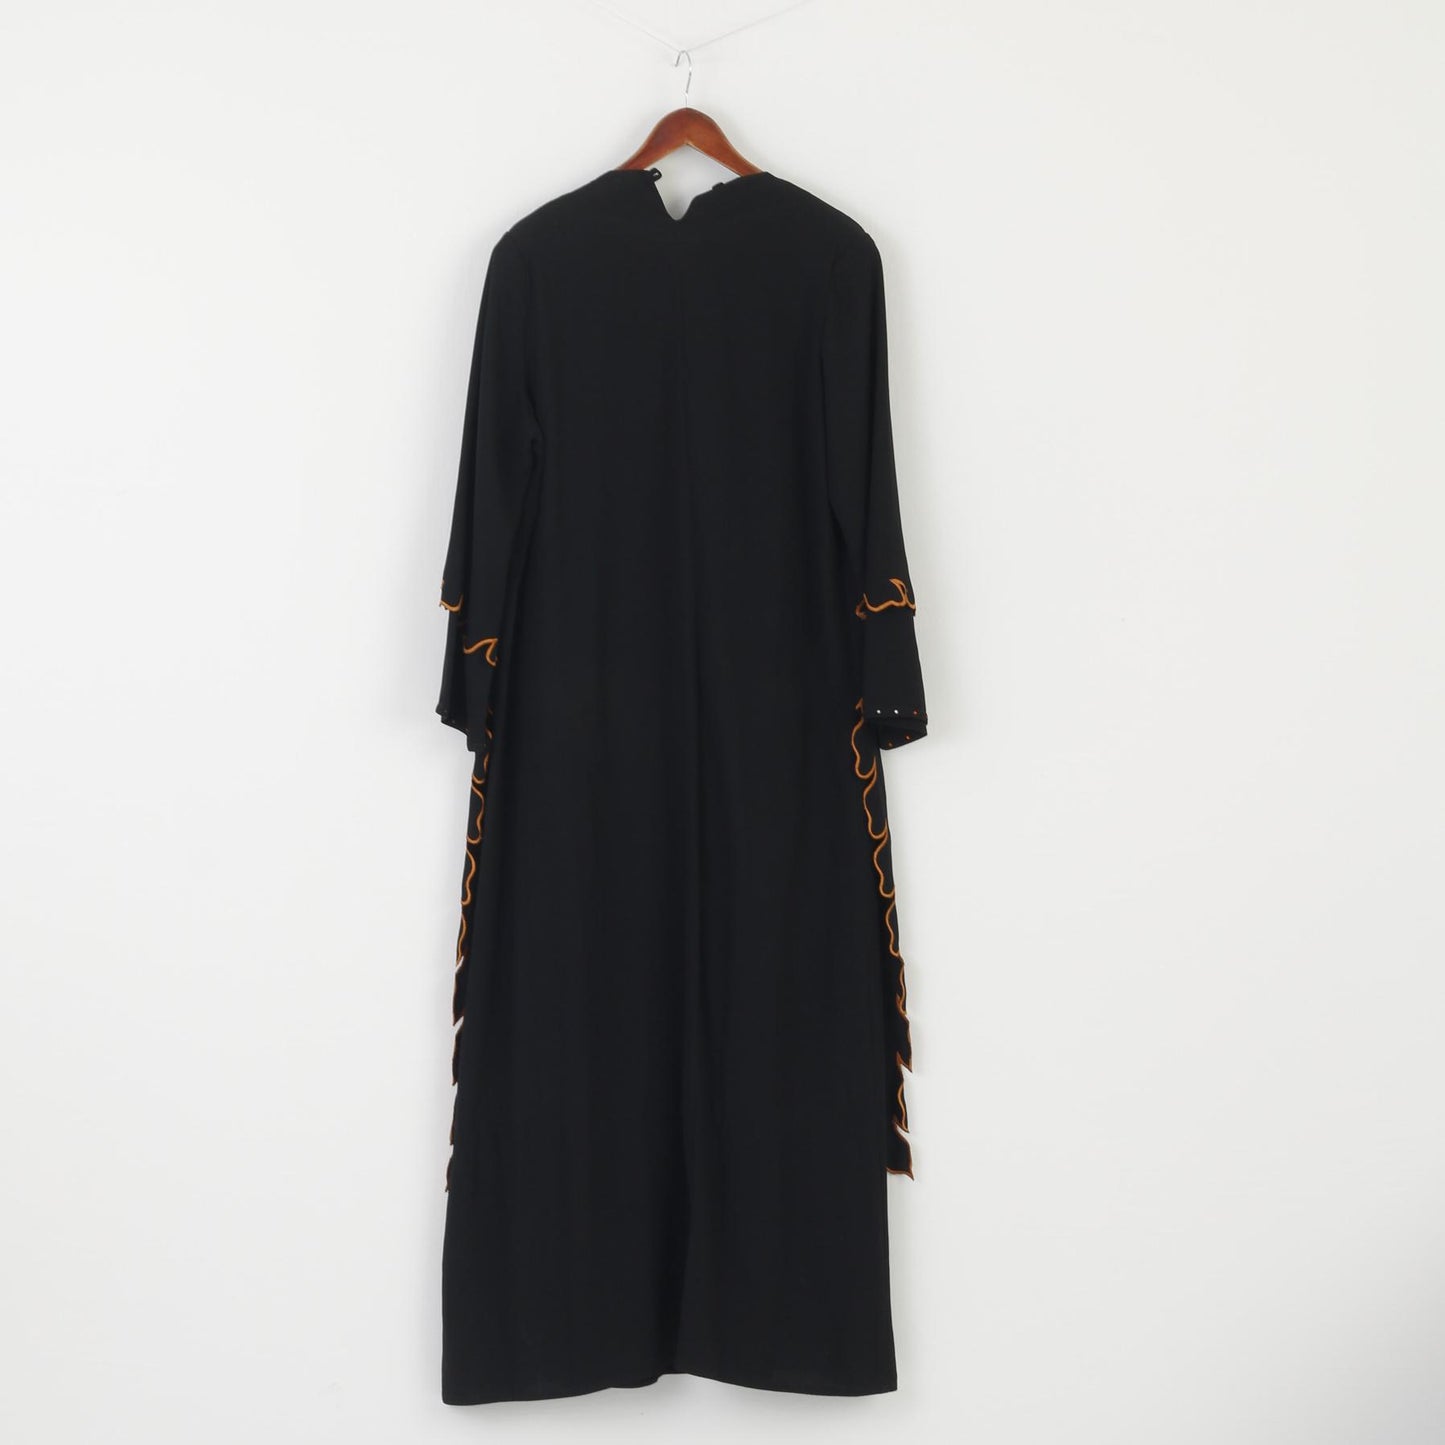 Organza Women L Long Dress Black Turkish Dubai Vintage Detailed Shoulder Pads